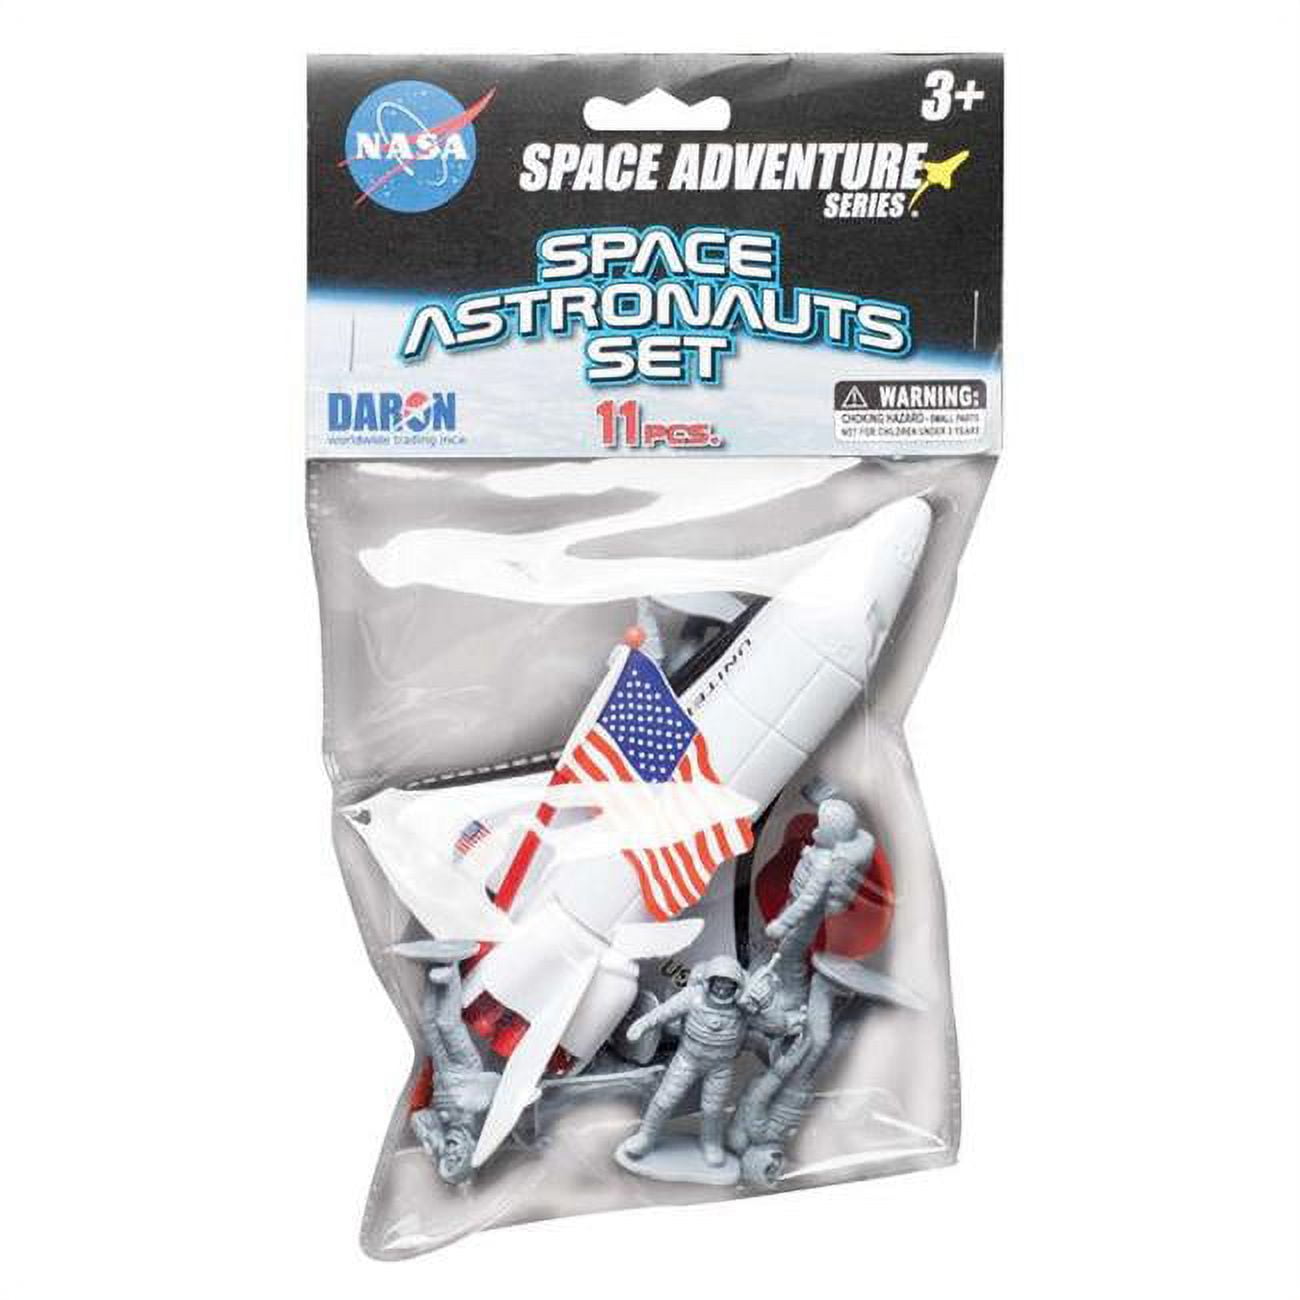 Space Adventure Hf99990a Astronauts Set Toy Bag, 11 Piece